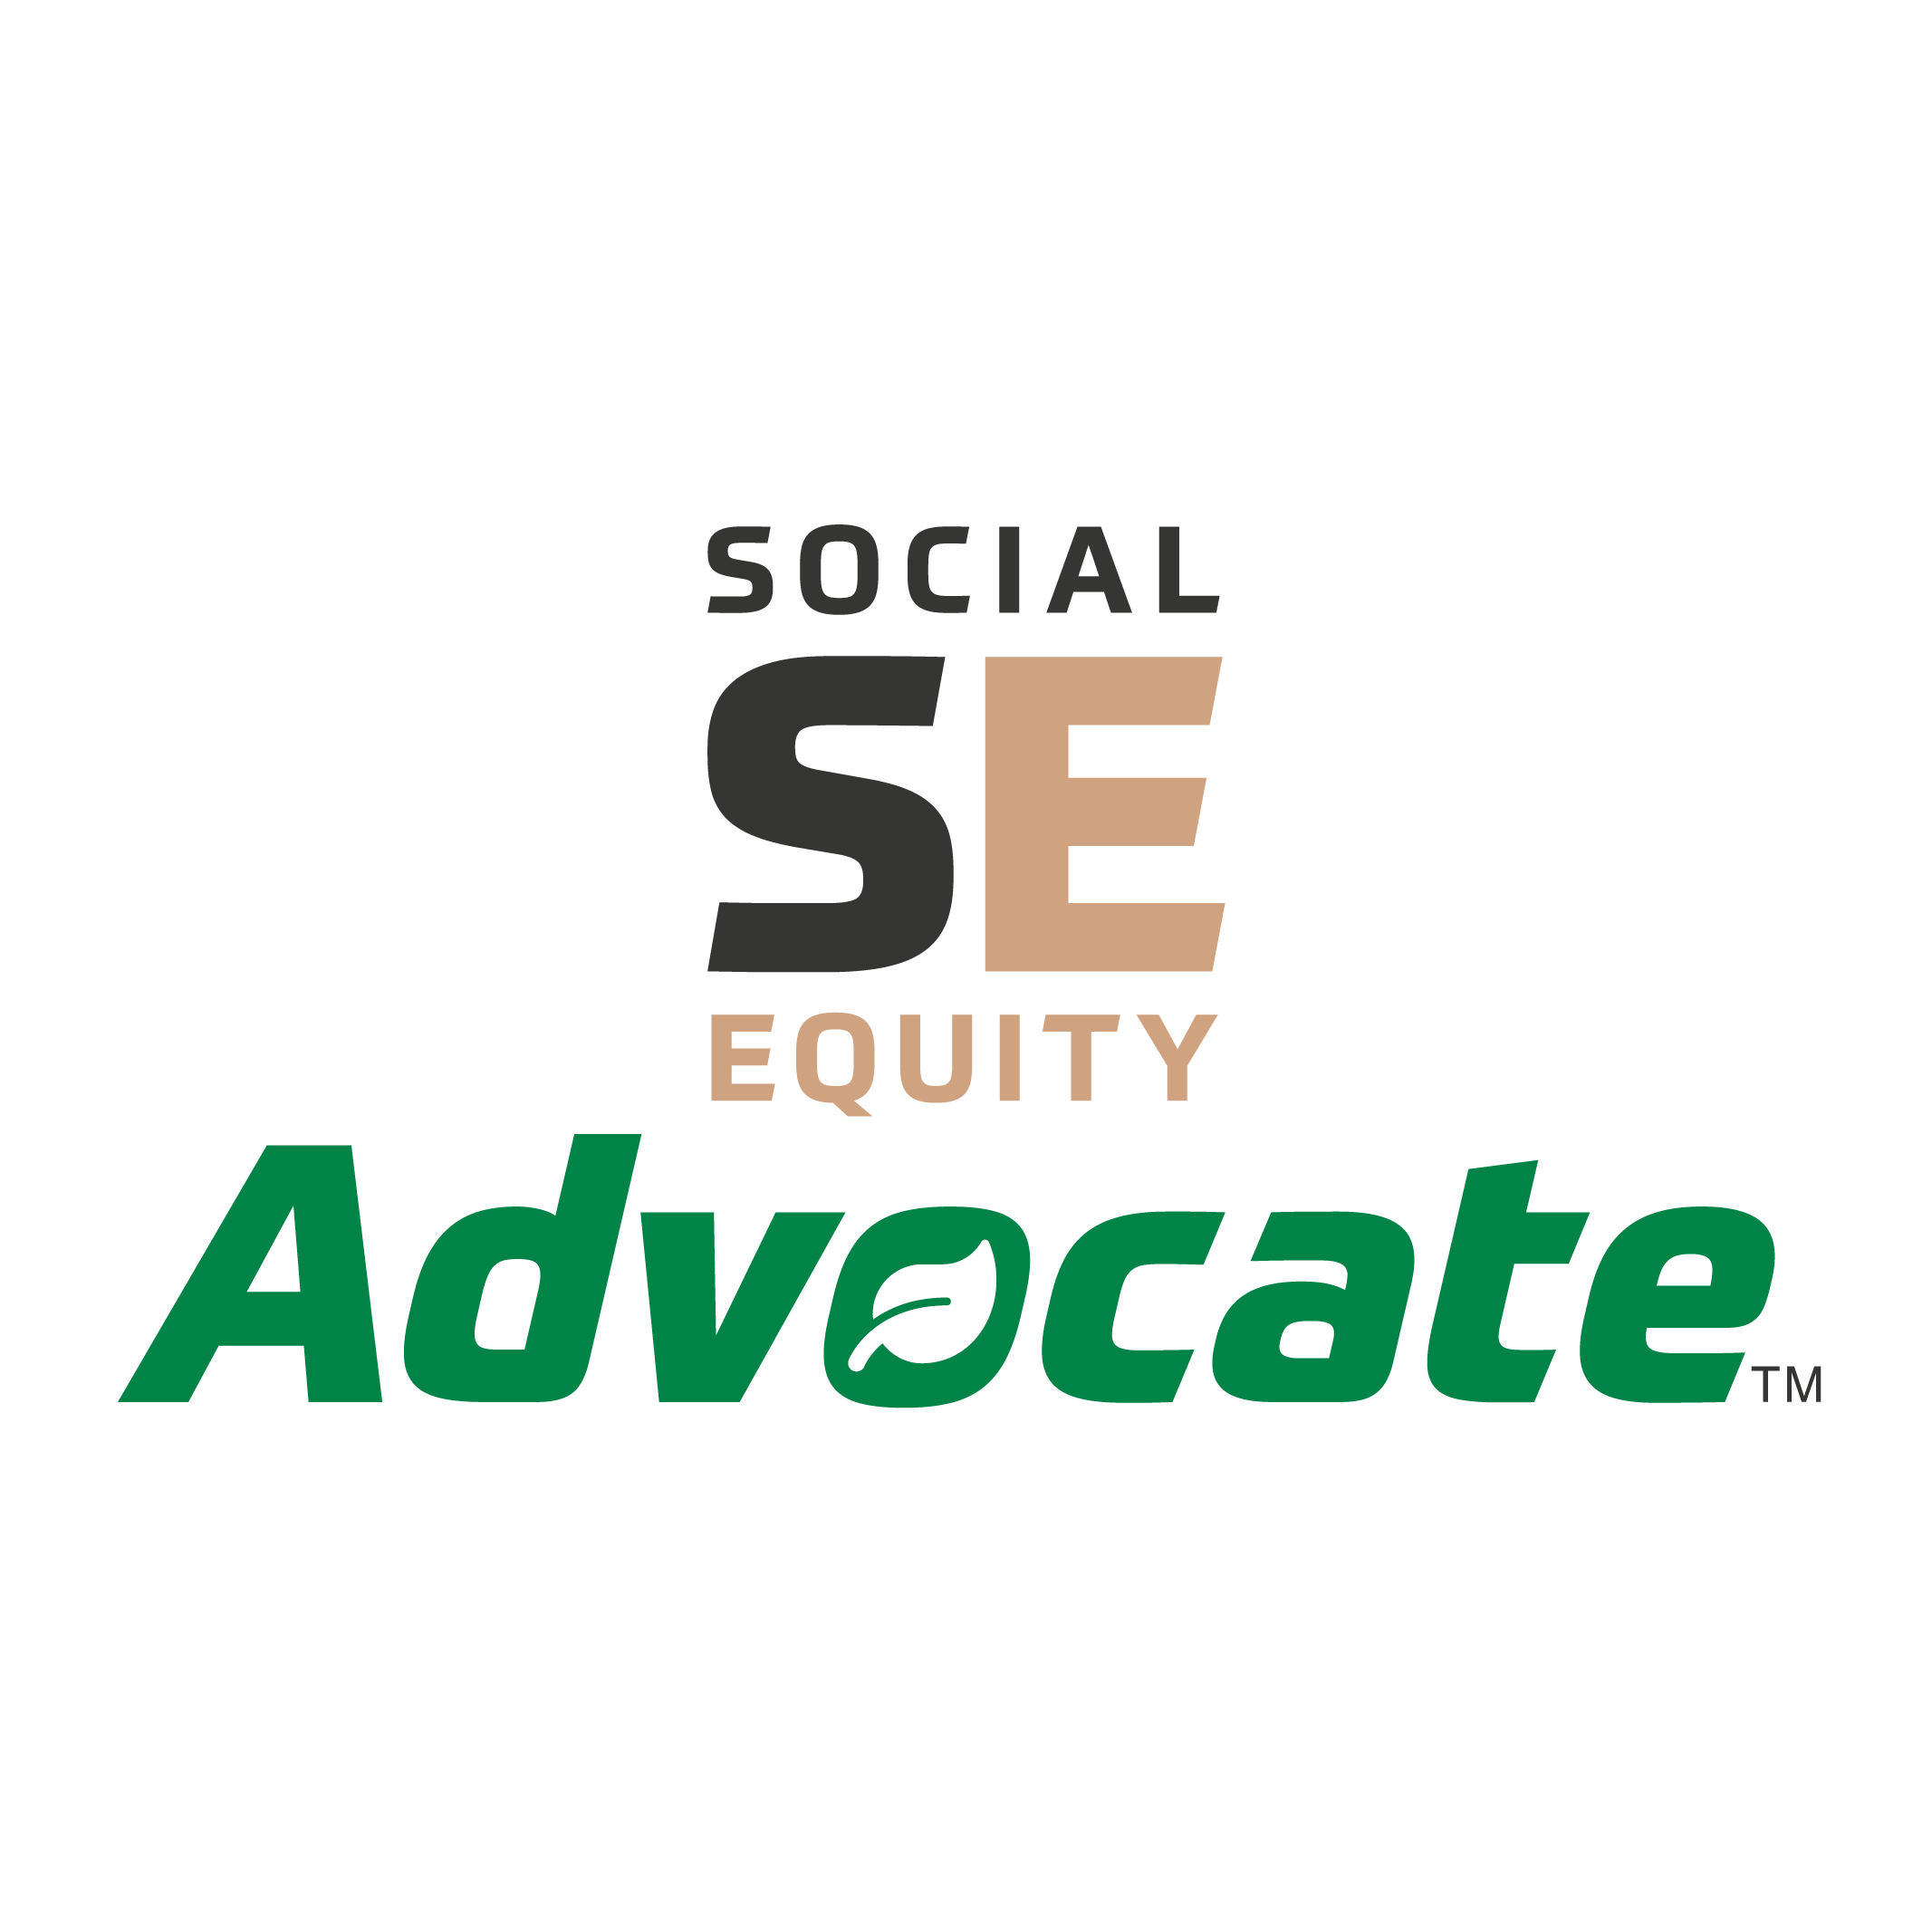 SocialEquityAdvocate.org Logo Social Media